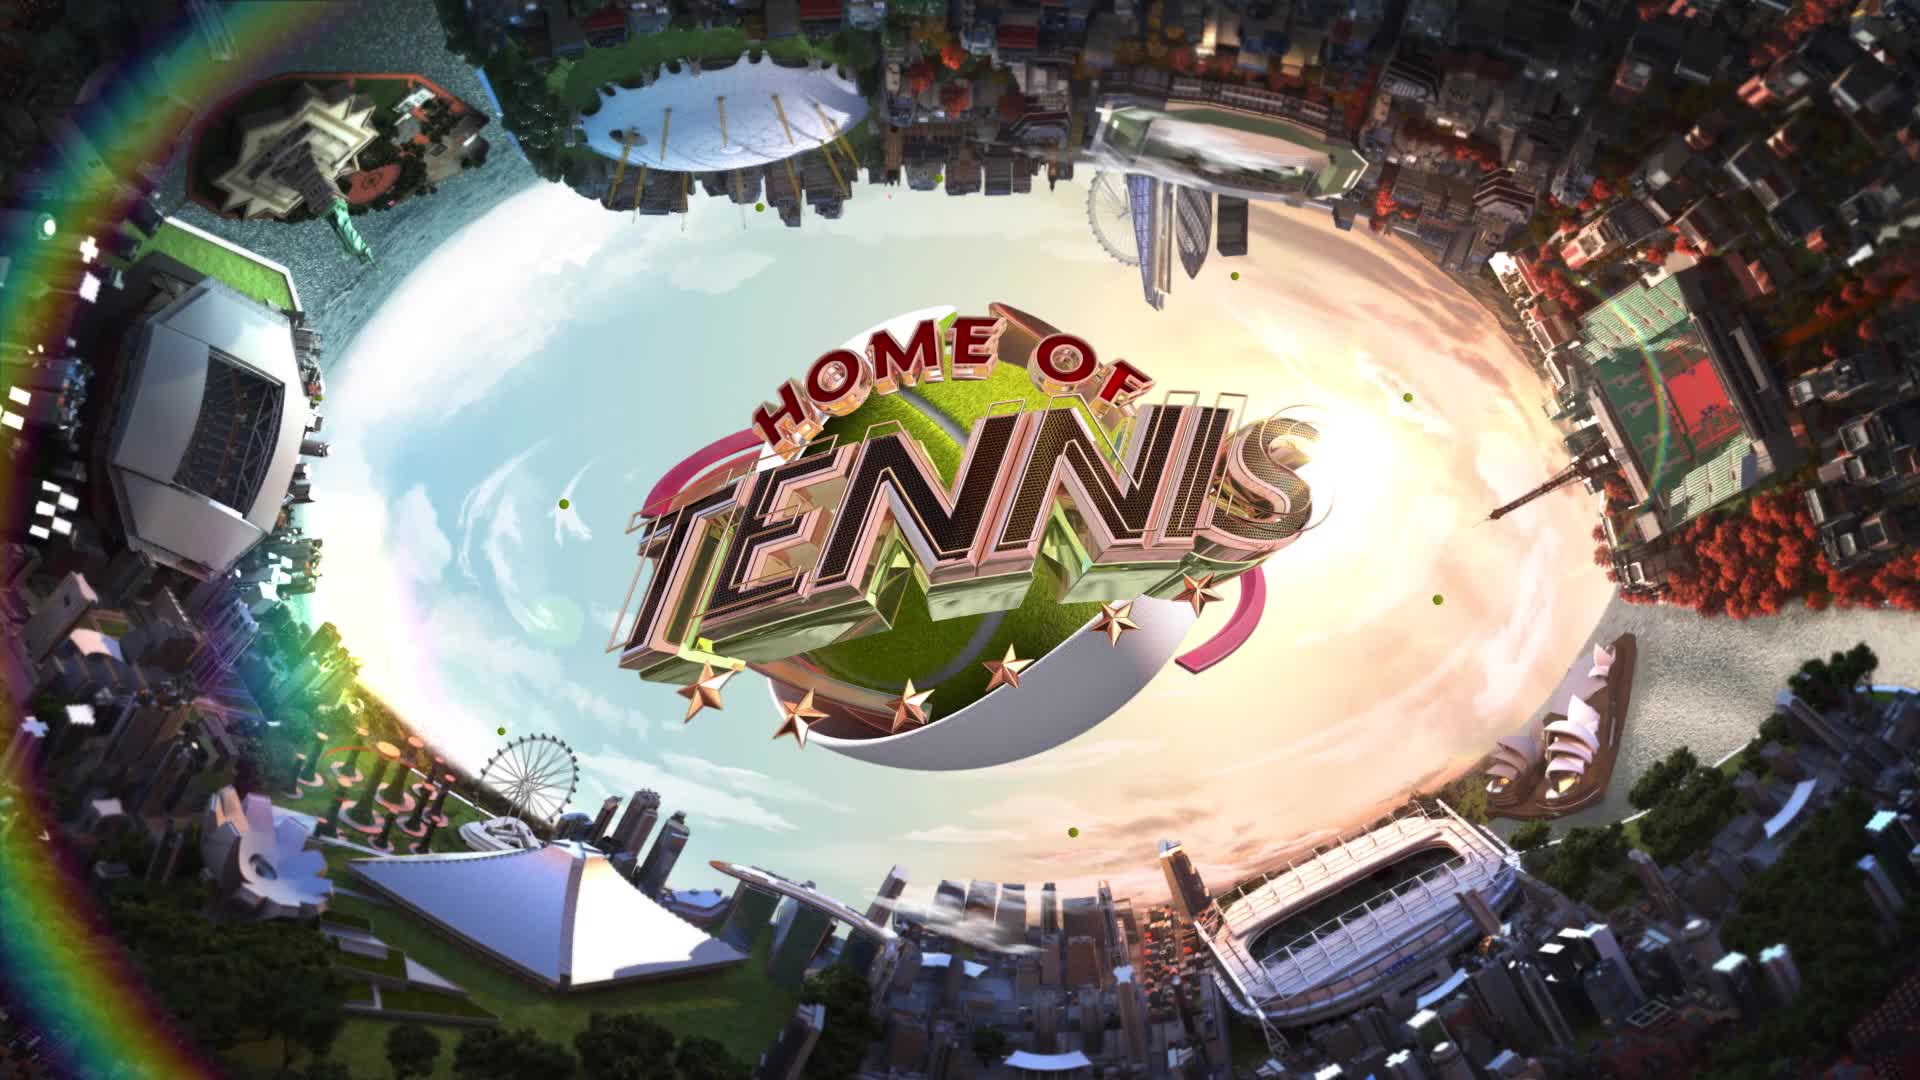 StarHub - Home Of Tennis (Director's Cut)